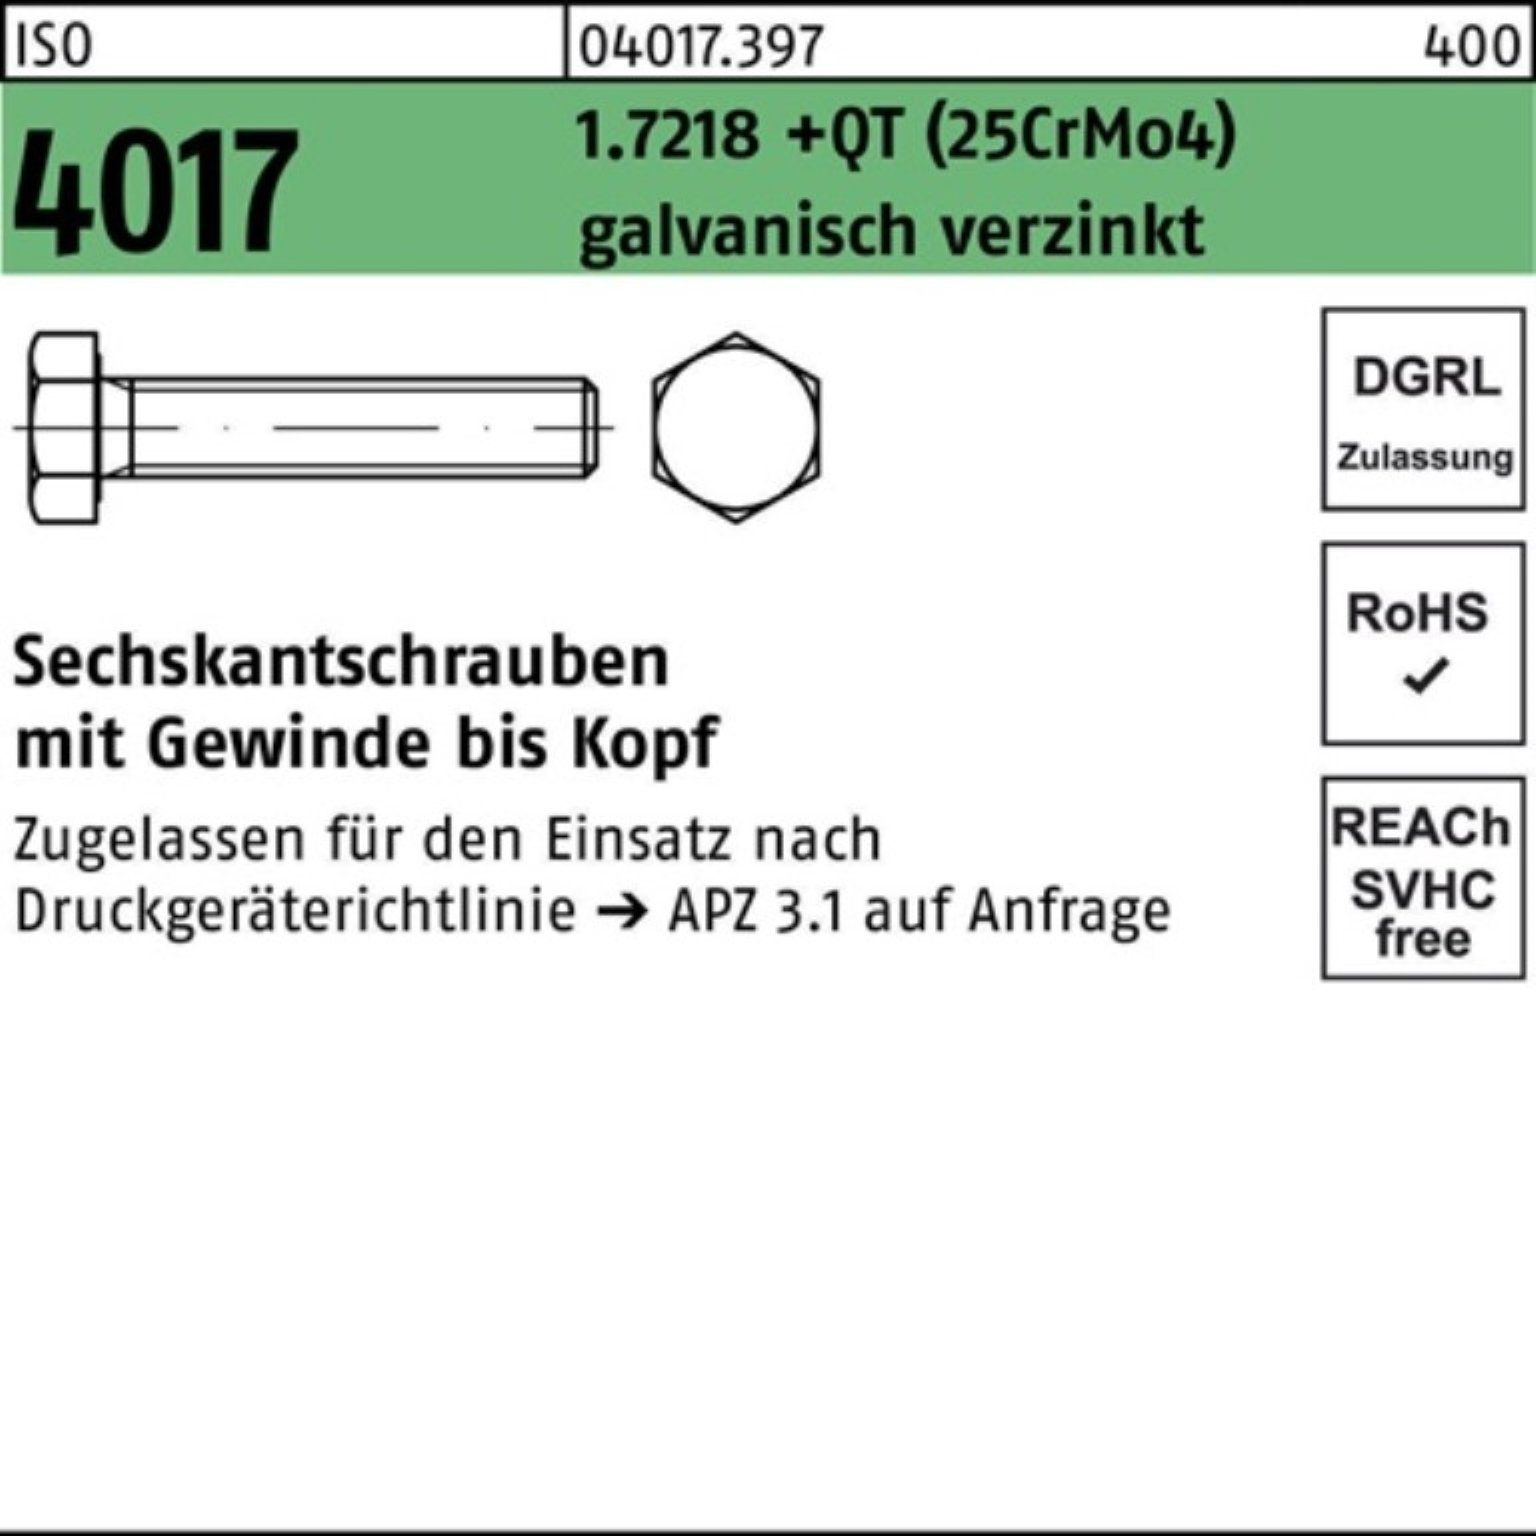 +QT 1.7218 4017 Bufab Sechskantschraube VG (25CrMo4) Pack M33x130 100er Sechskantschraube ISO